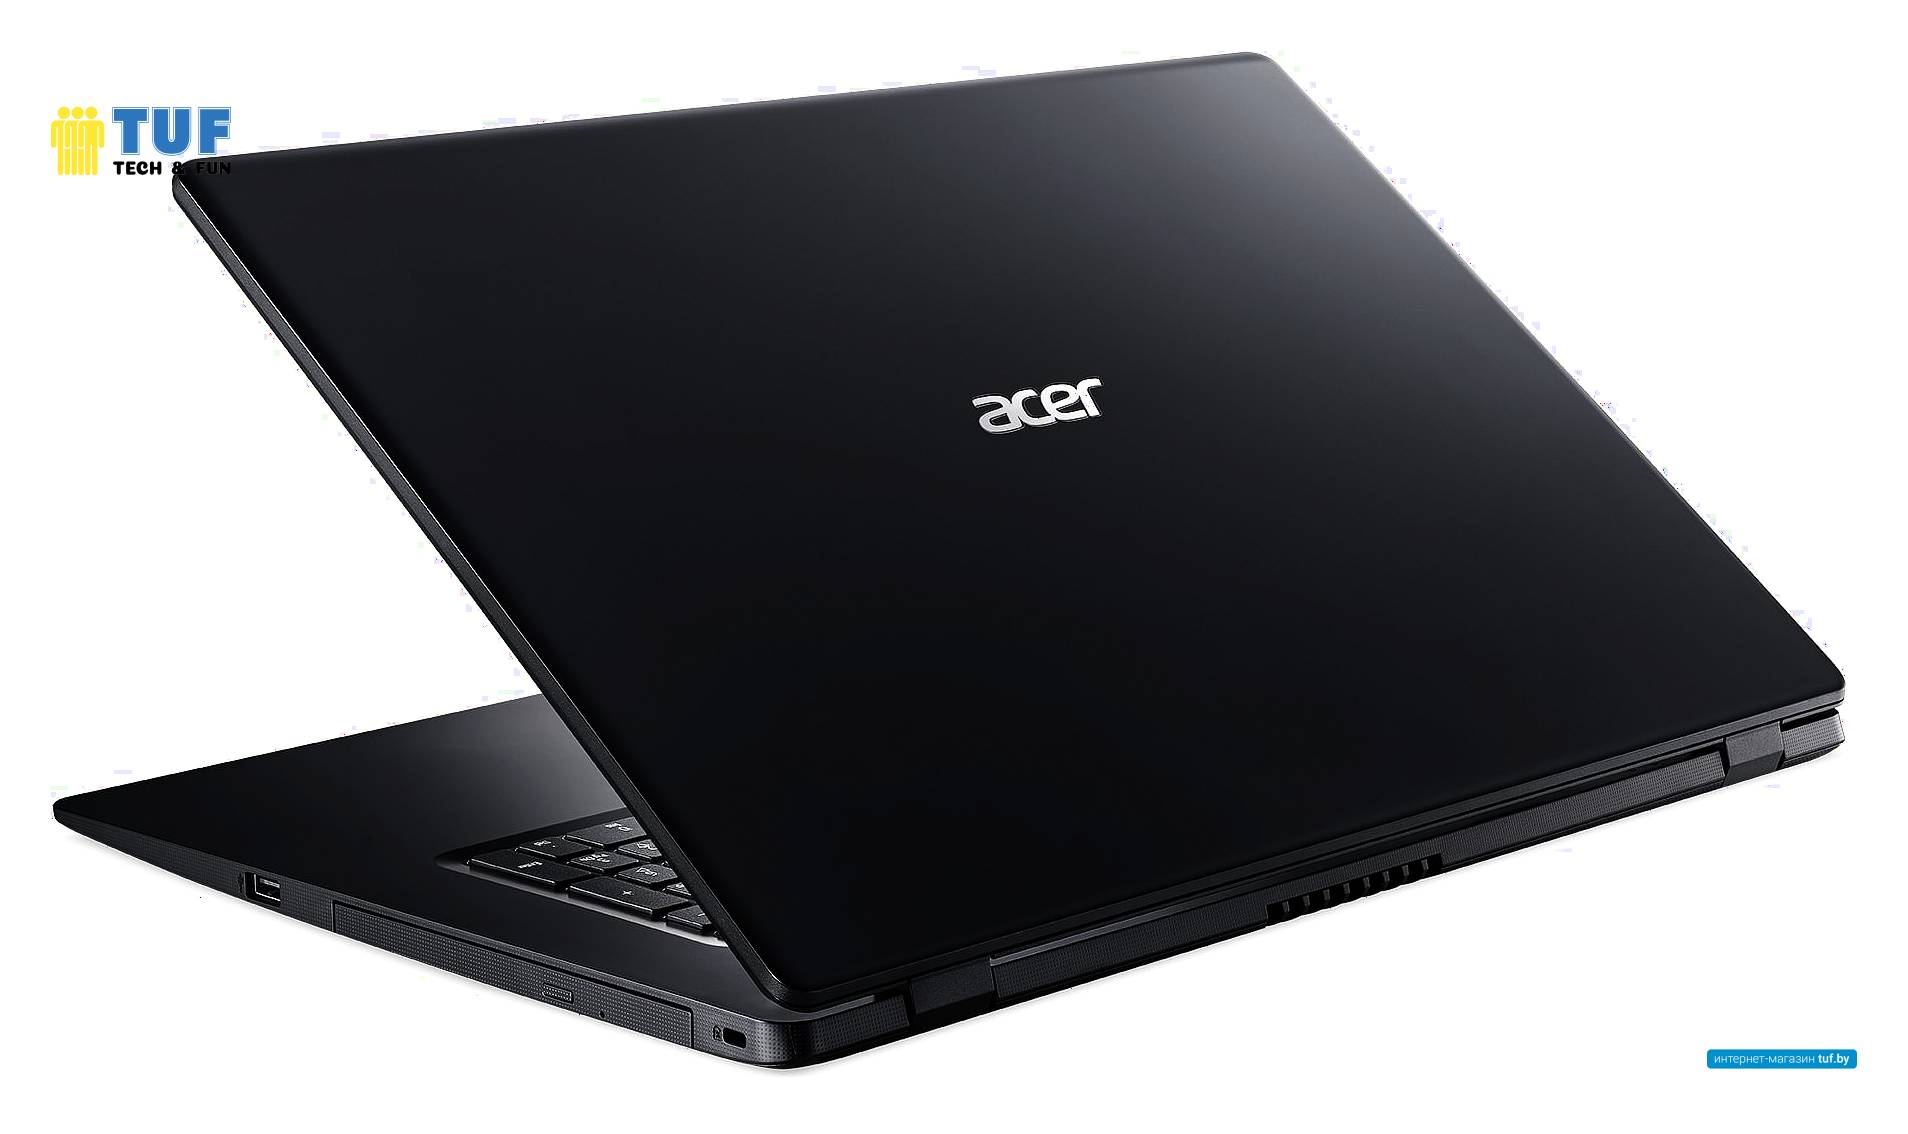 Ноутбук Acer Aspire 3 A317-52-599Q NX.HZWER.007